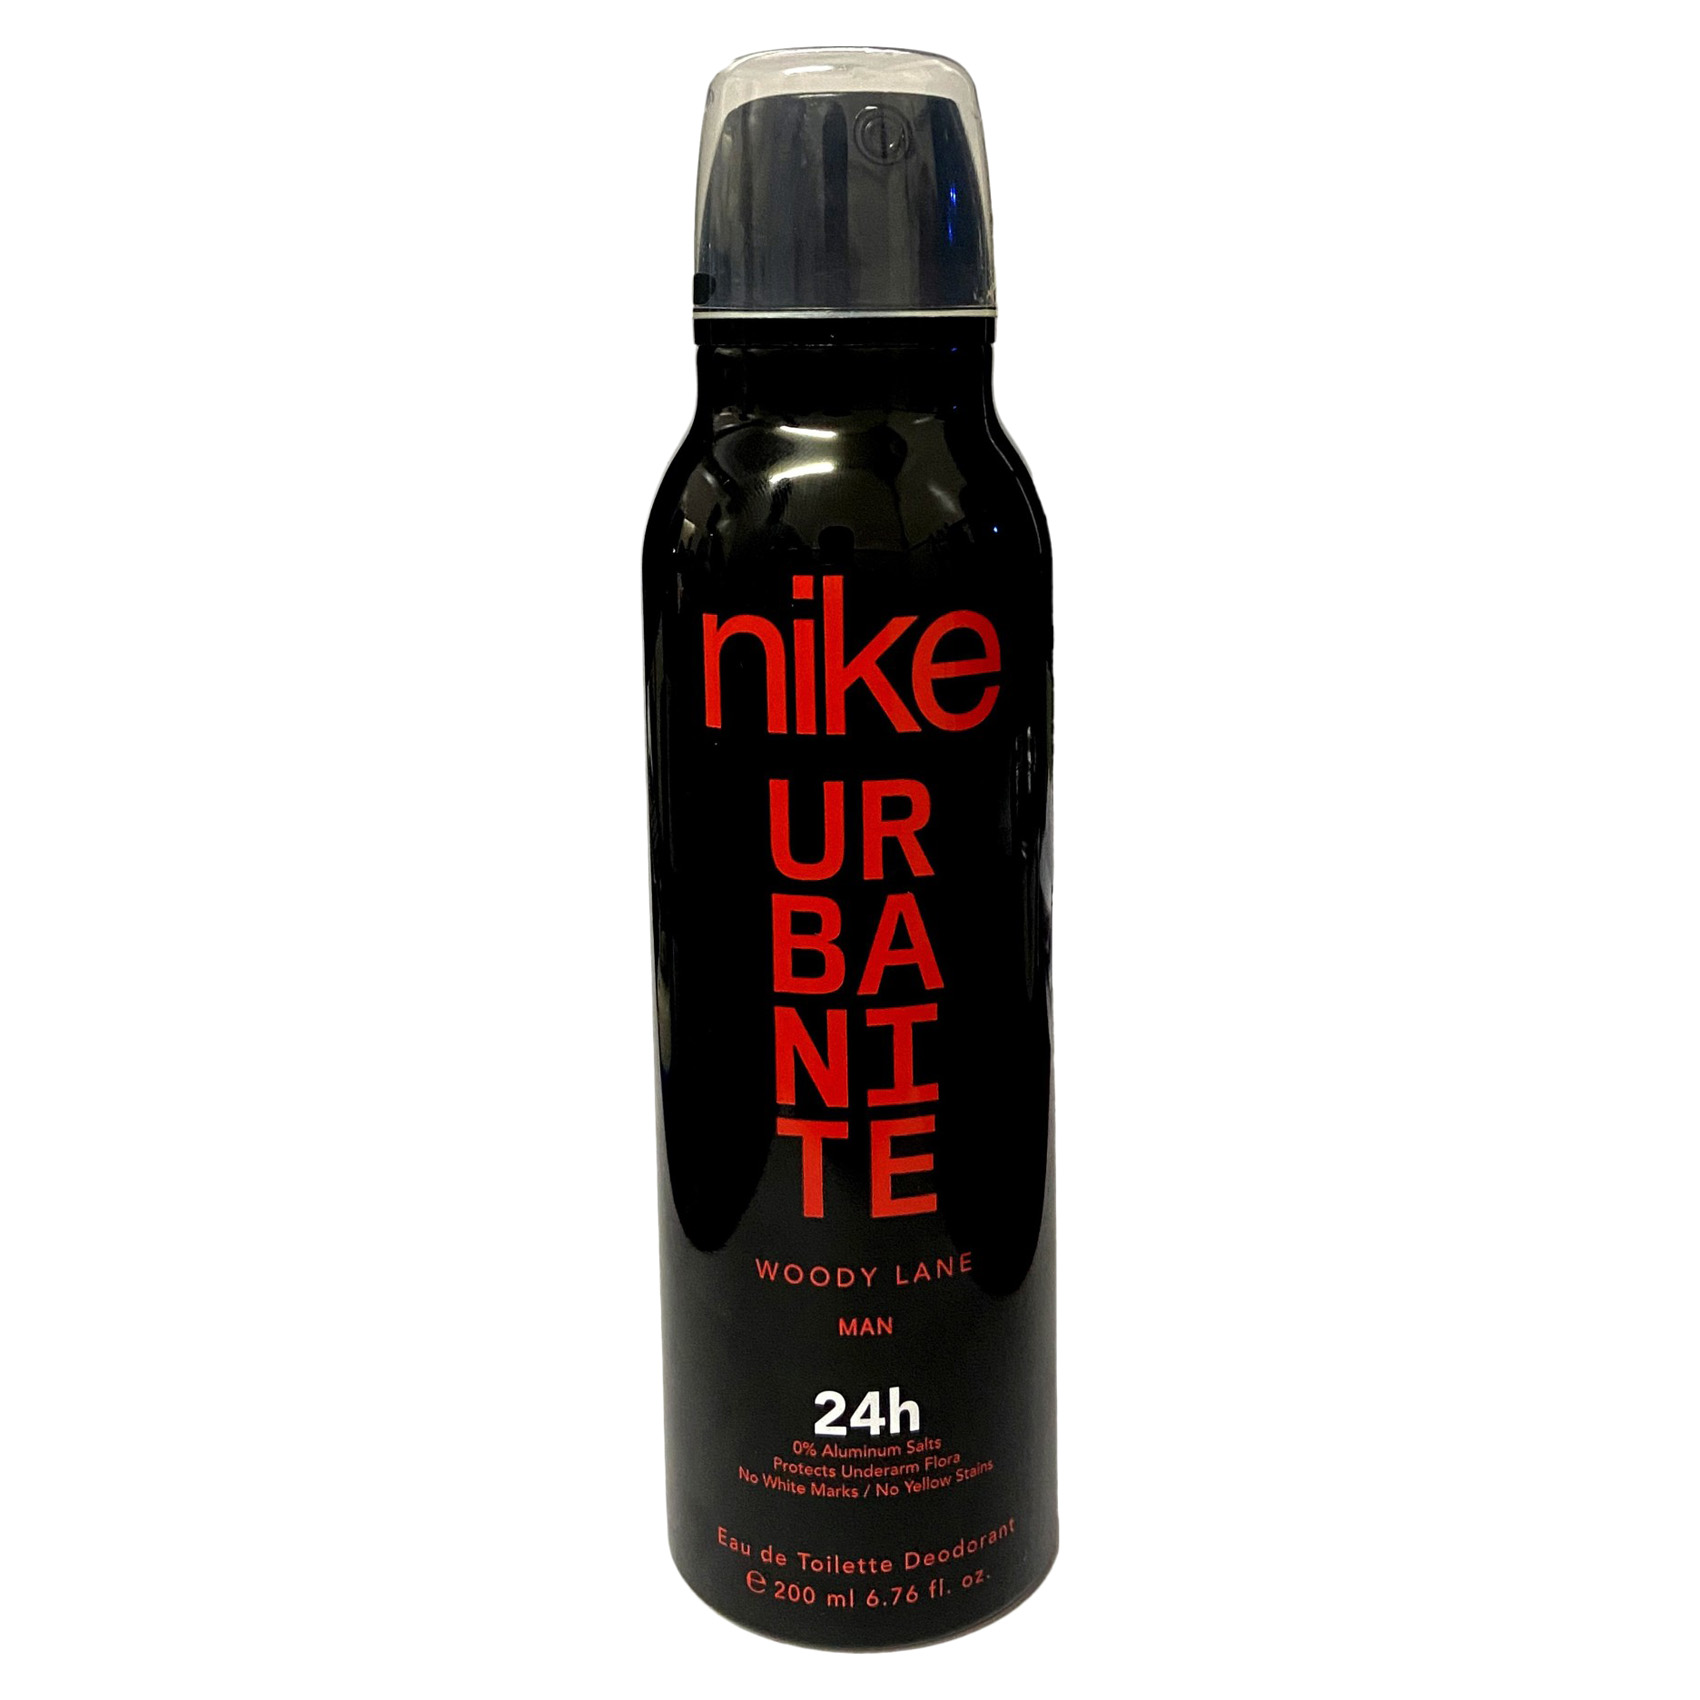 Nike Urbanite Woody Lane Eau De Toilette Deodorant Clear 200ml